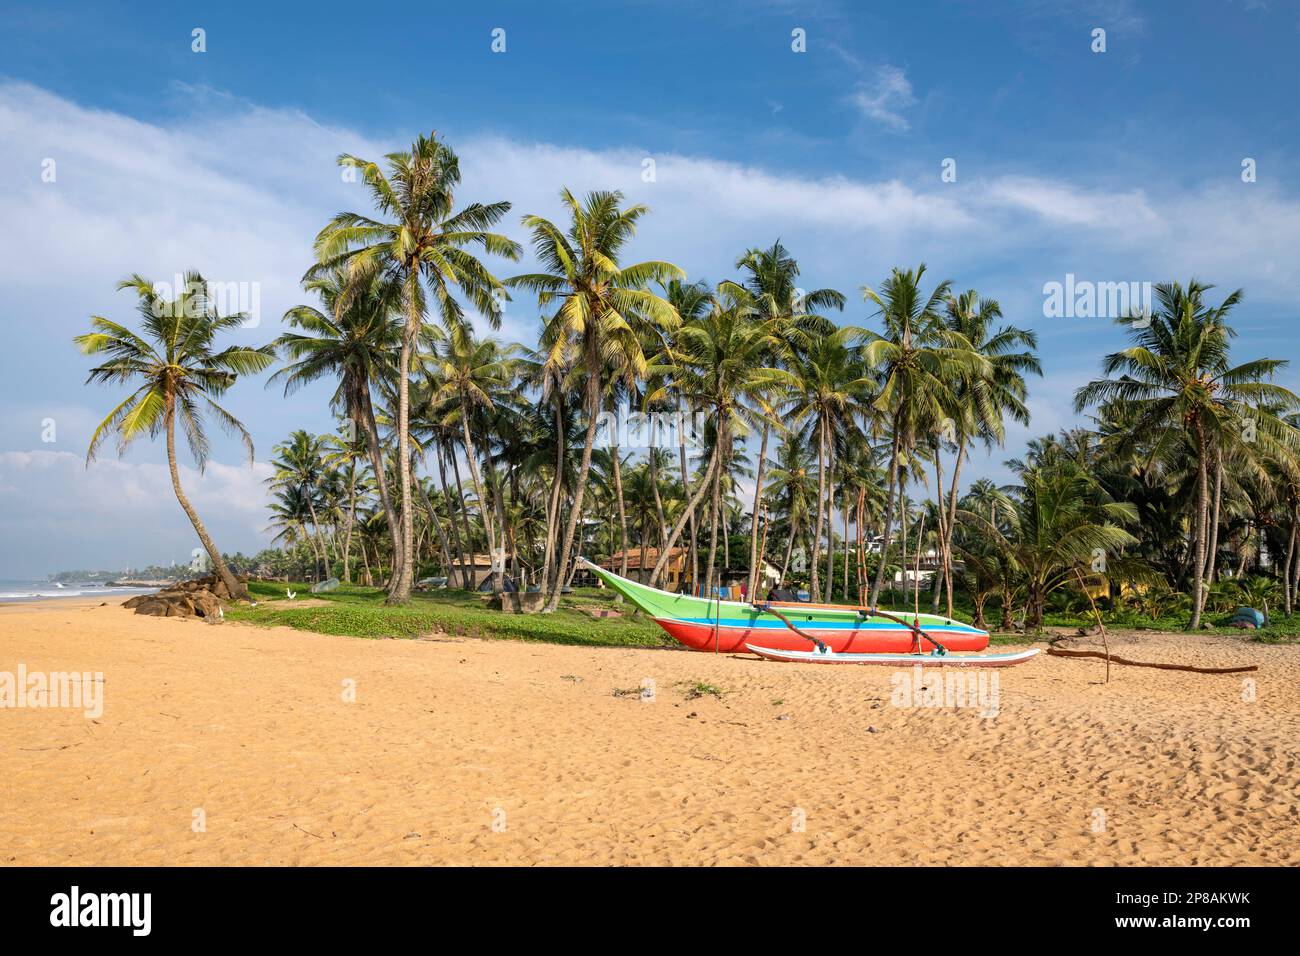 Sri Lanka, Südprovinz, Süd, Süd, Süd, plage, Strand, Strand, palmier, palmiers, Palme, Palmen, Palmen, Palmen, Bateau de pêche, bateaux de p Stockfoto